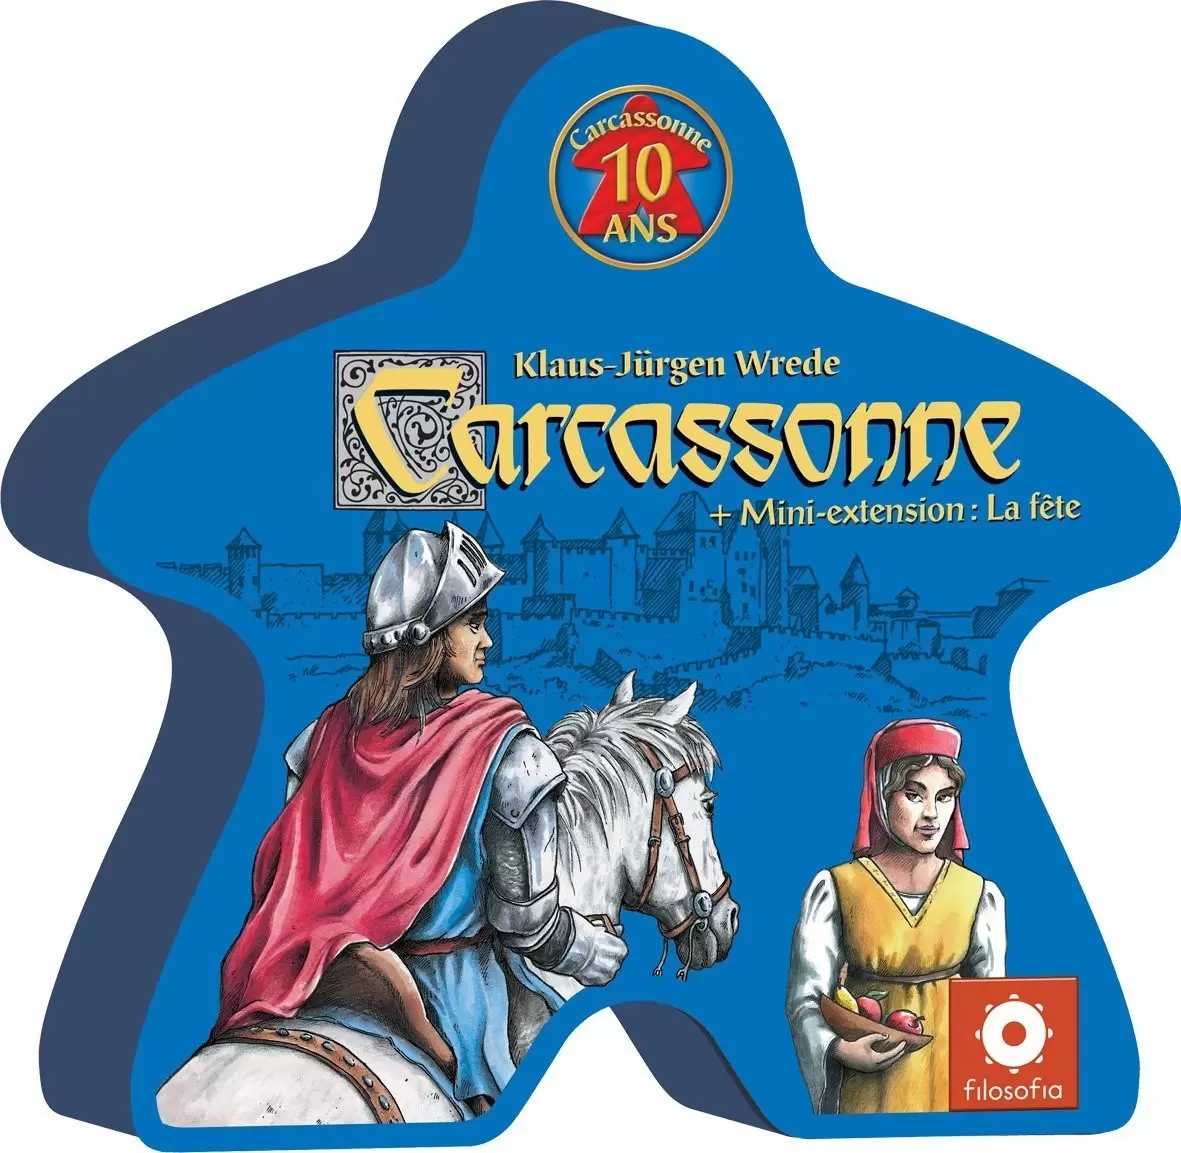 Carcassonne - Carcassonne Edition - 10 ans